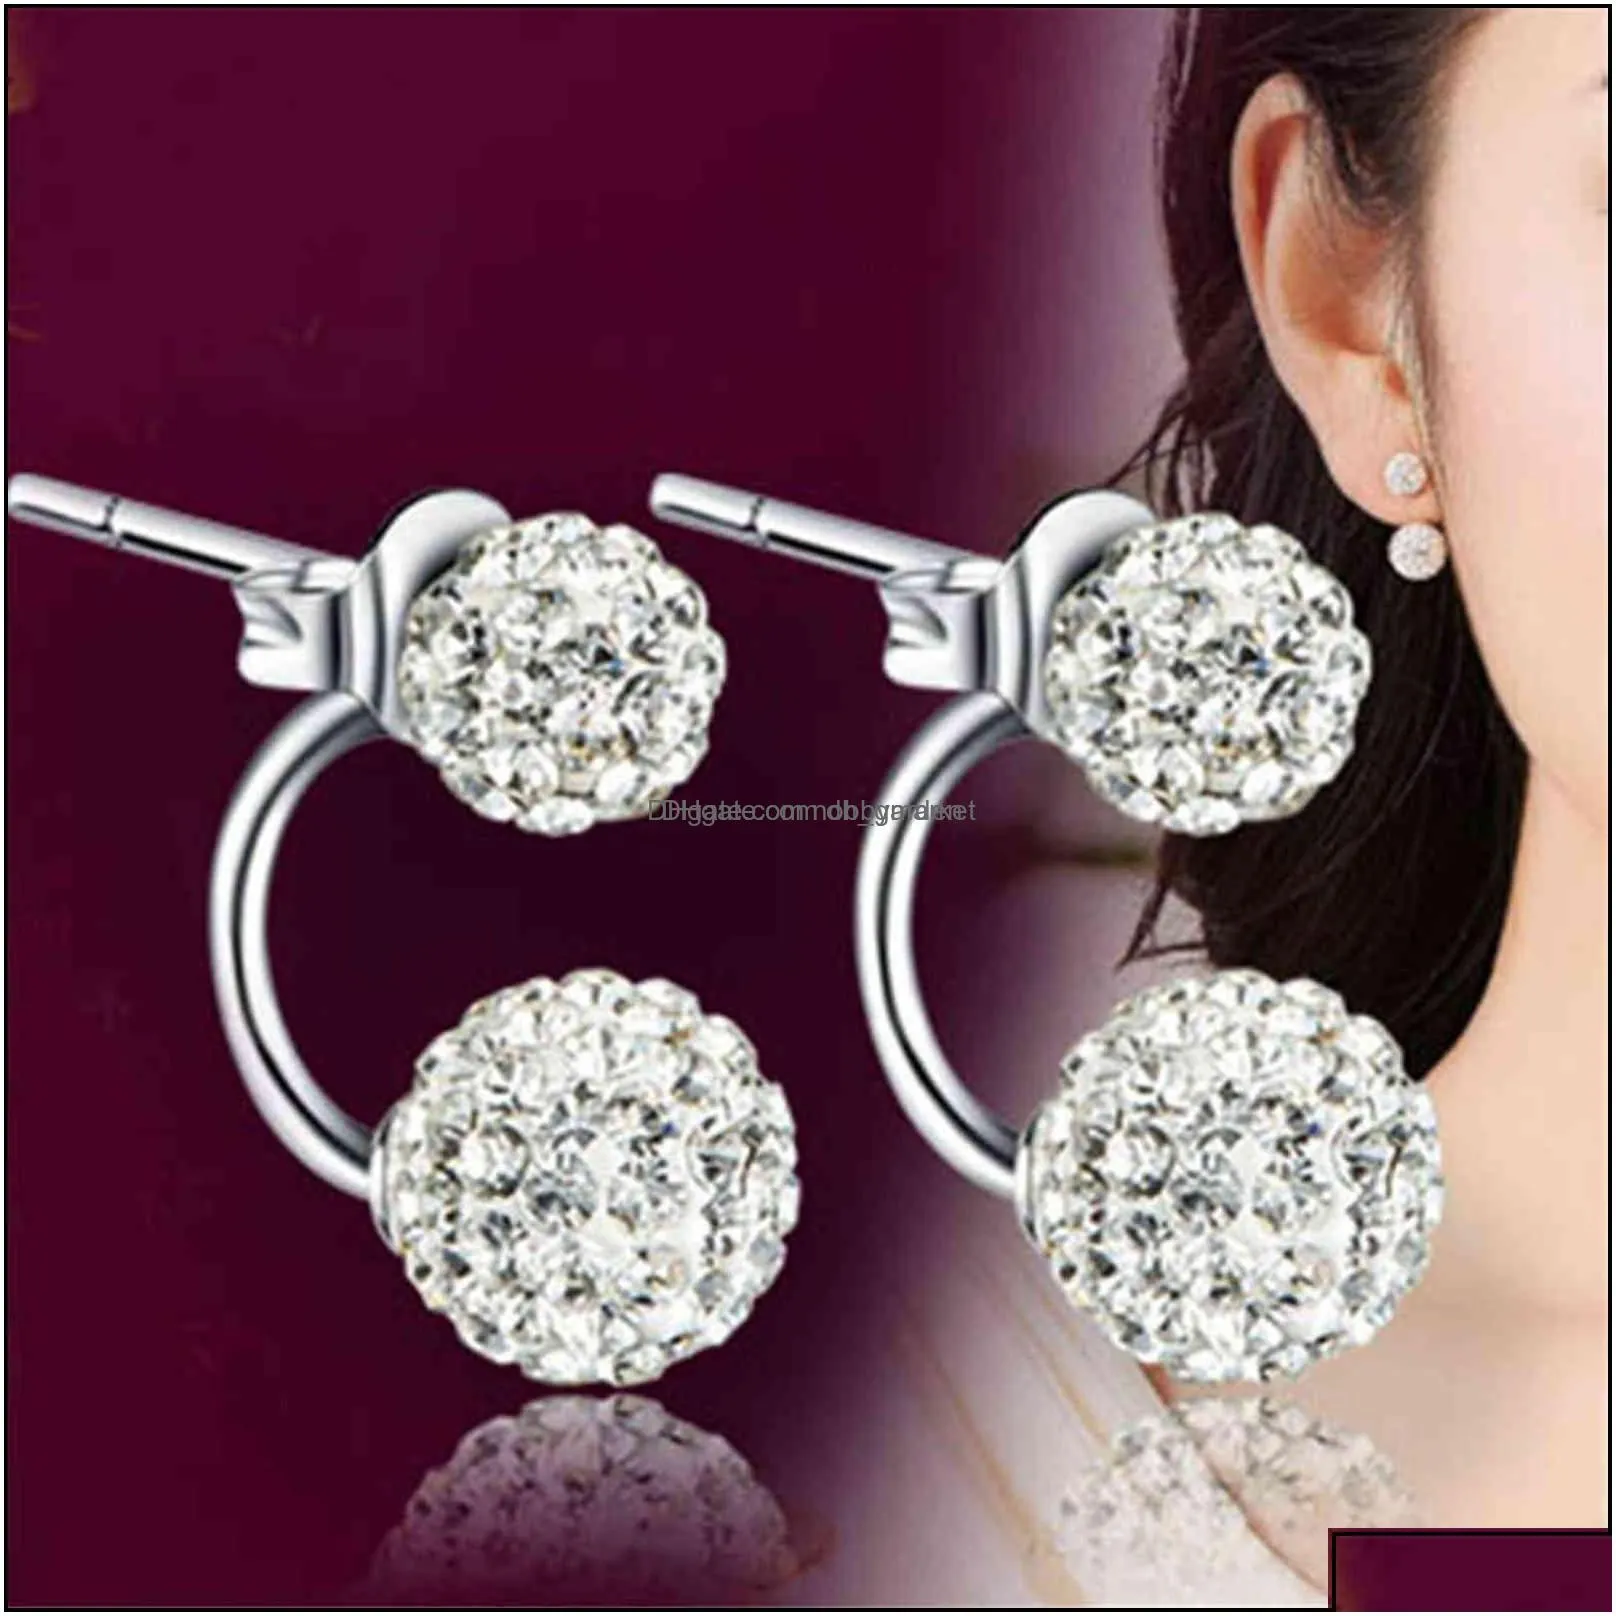 charm earrings jewelry nehzy 925 sterling sier shambhala luxury zirconia female original brand of highend vintage stud drop delivery 2021